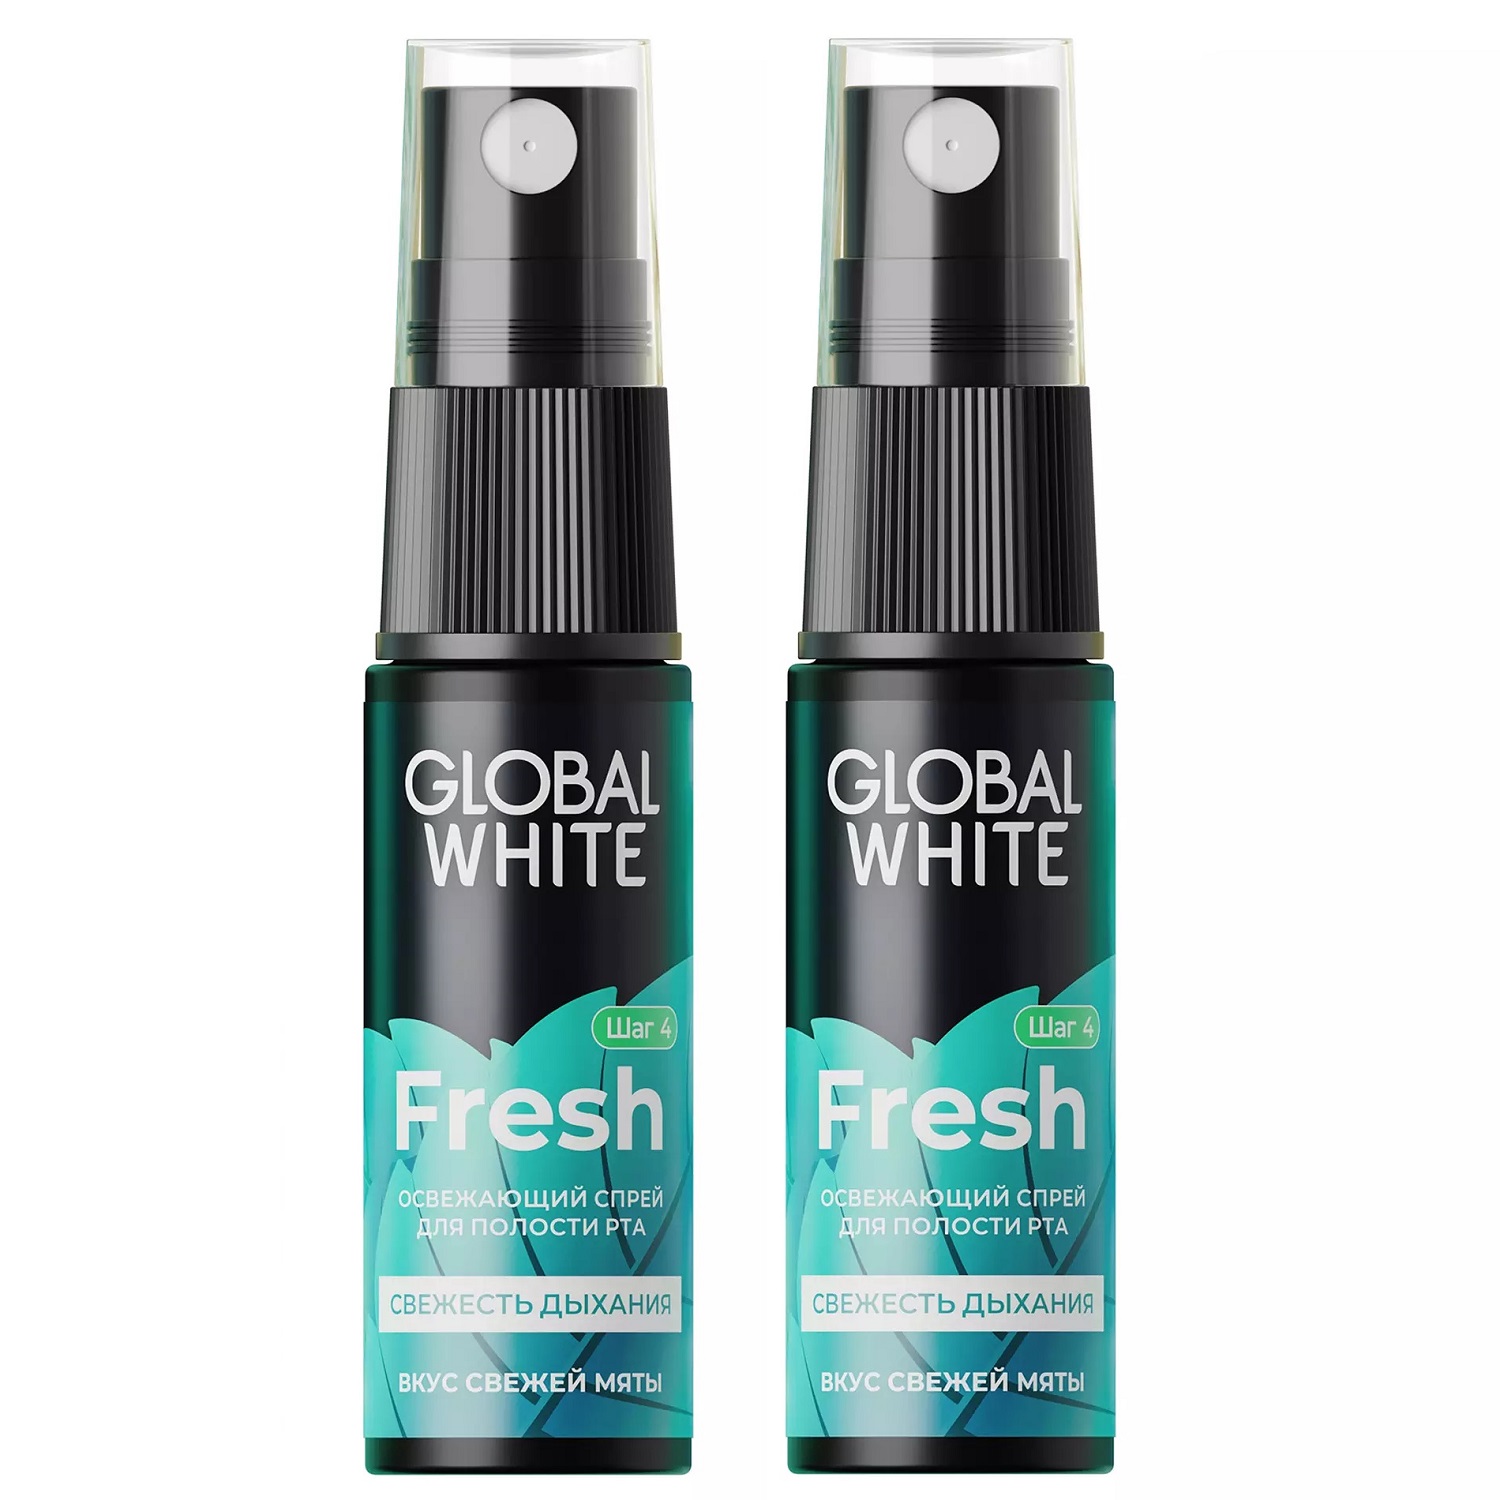 Global White Набор: освежающий спрей для полости рта «Свежее дыхание», 2 х 15 мл (Global White, Поддержание эффекта отбеливания) гель для полости рта 15 мл sos